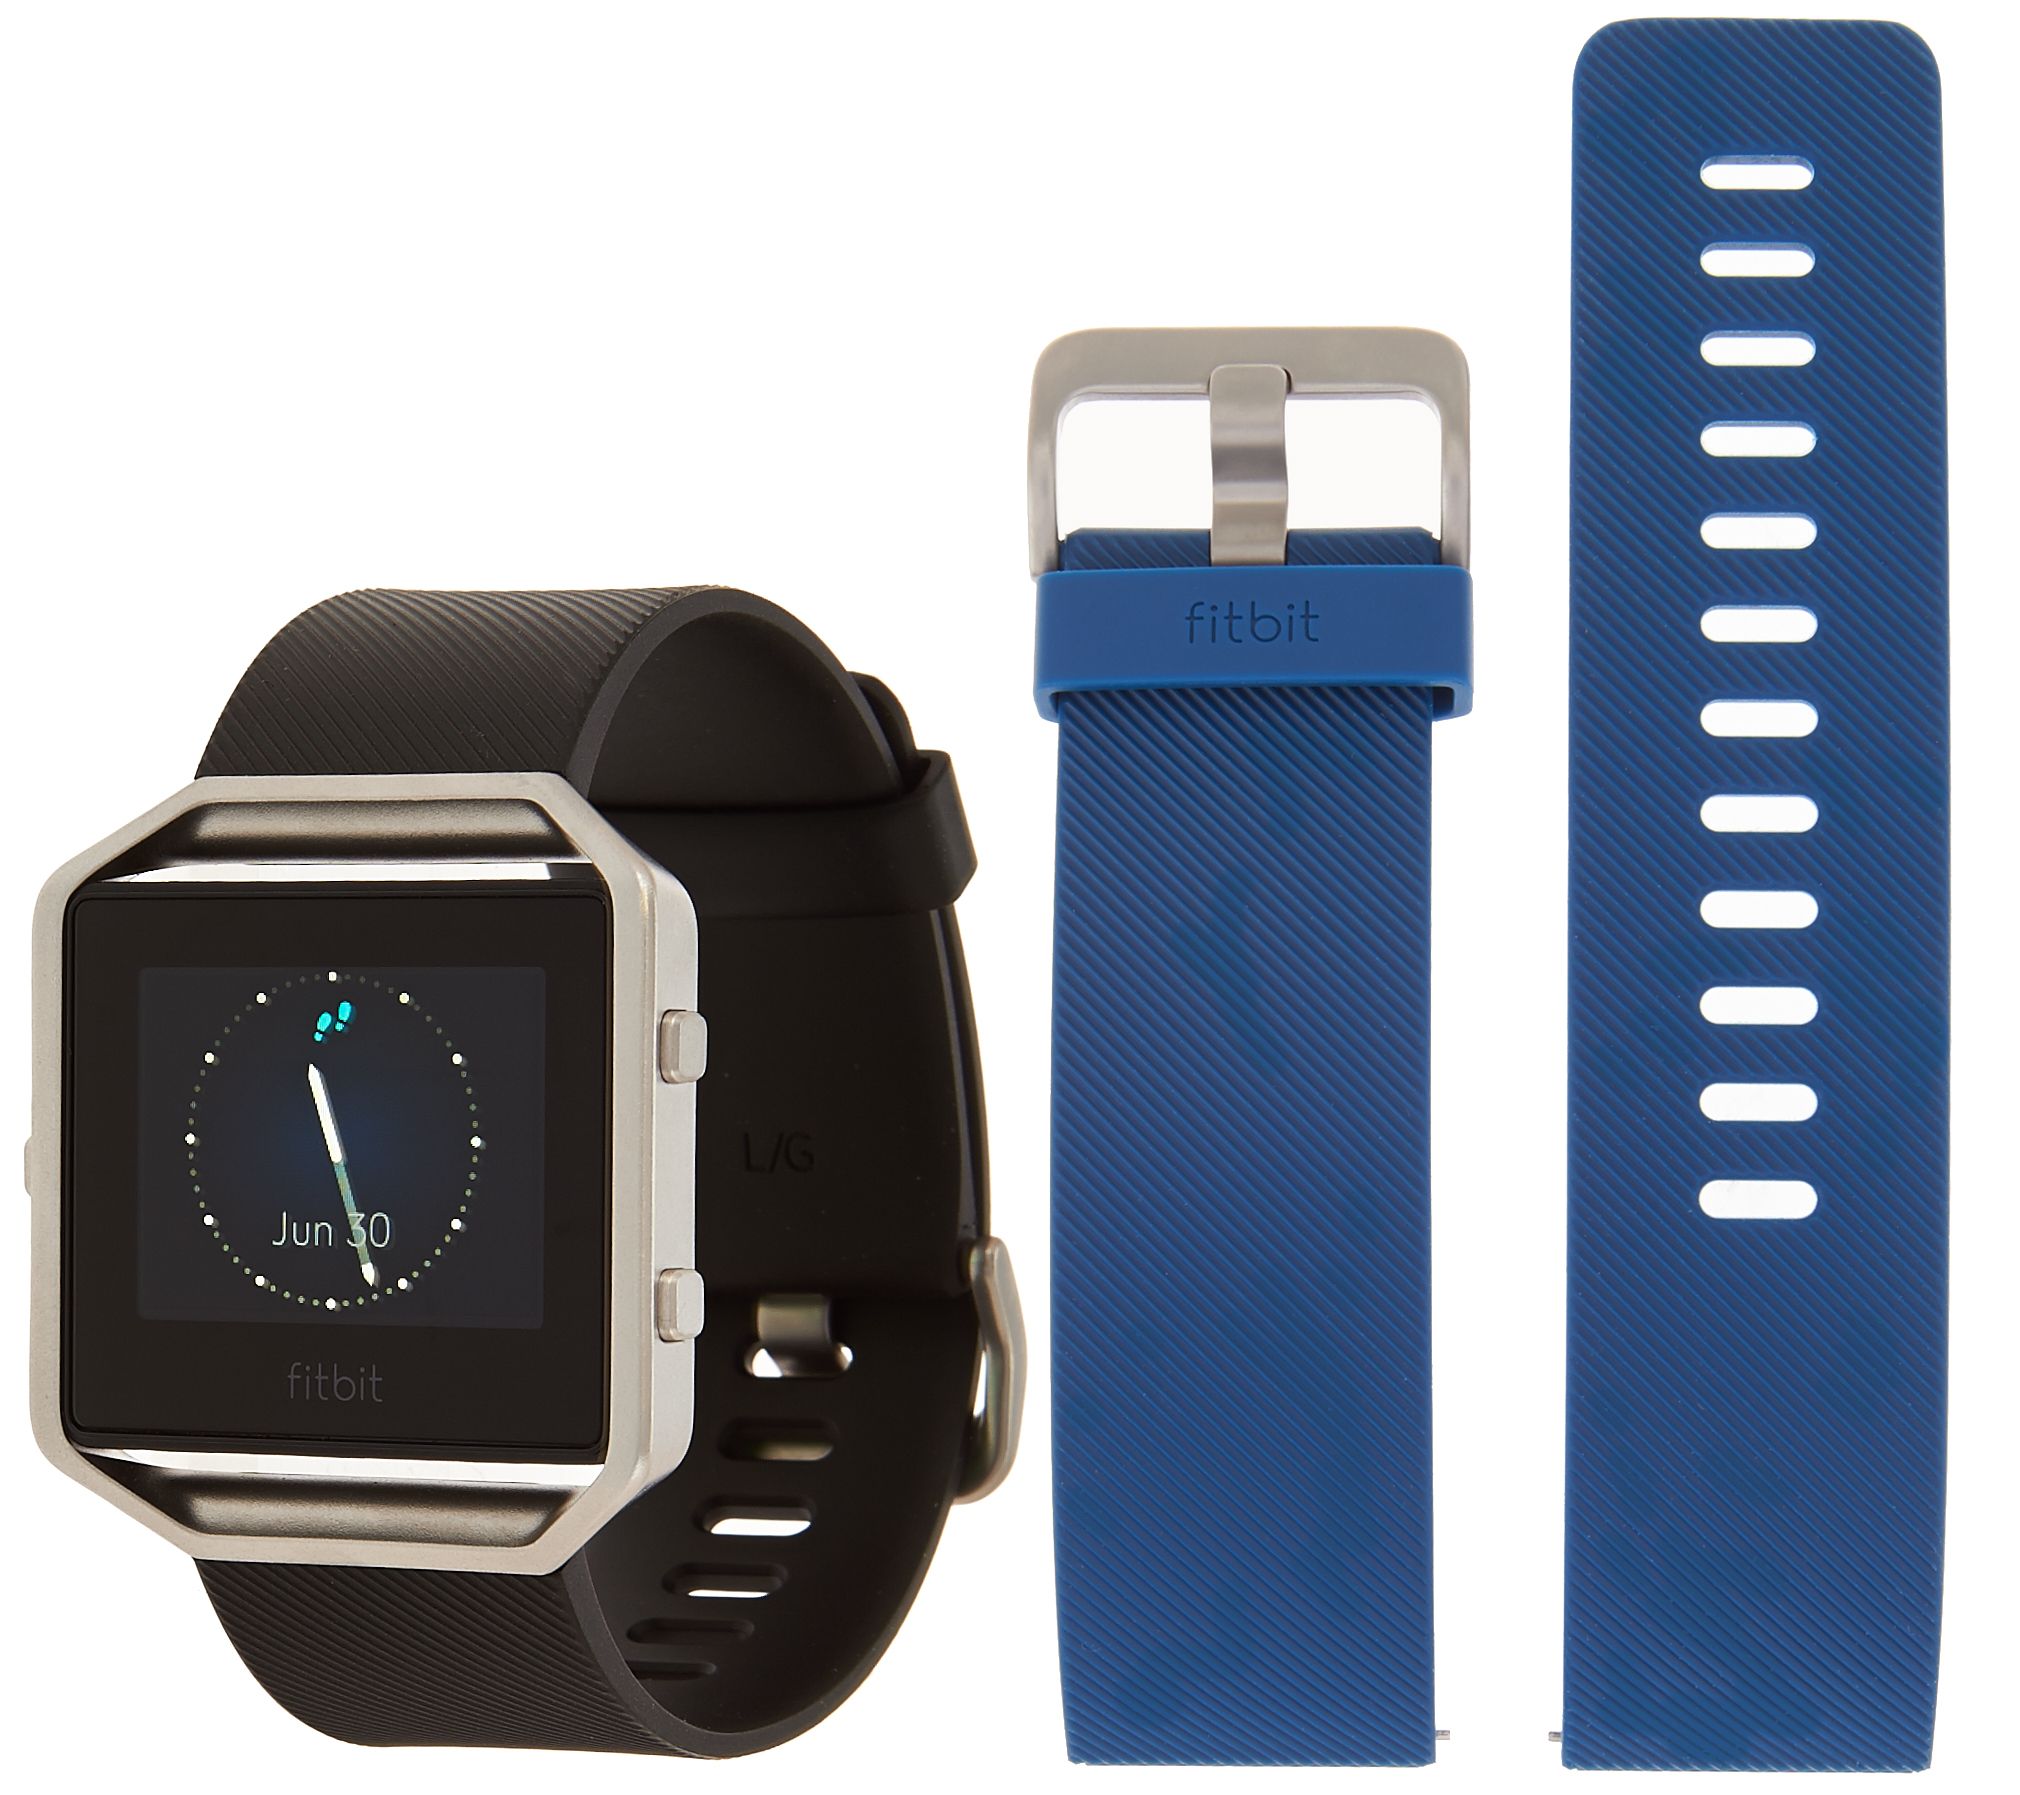 Fitbit Blaze Smart Fitness Watch with 